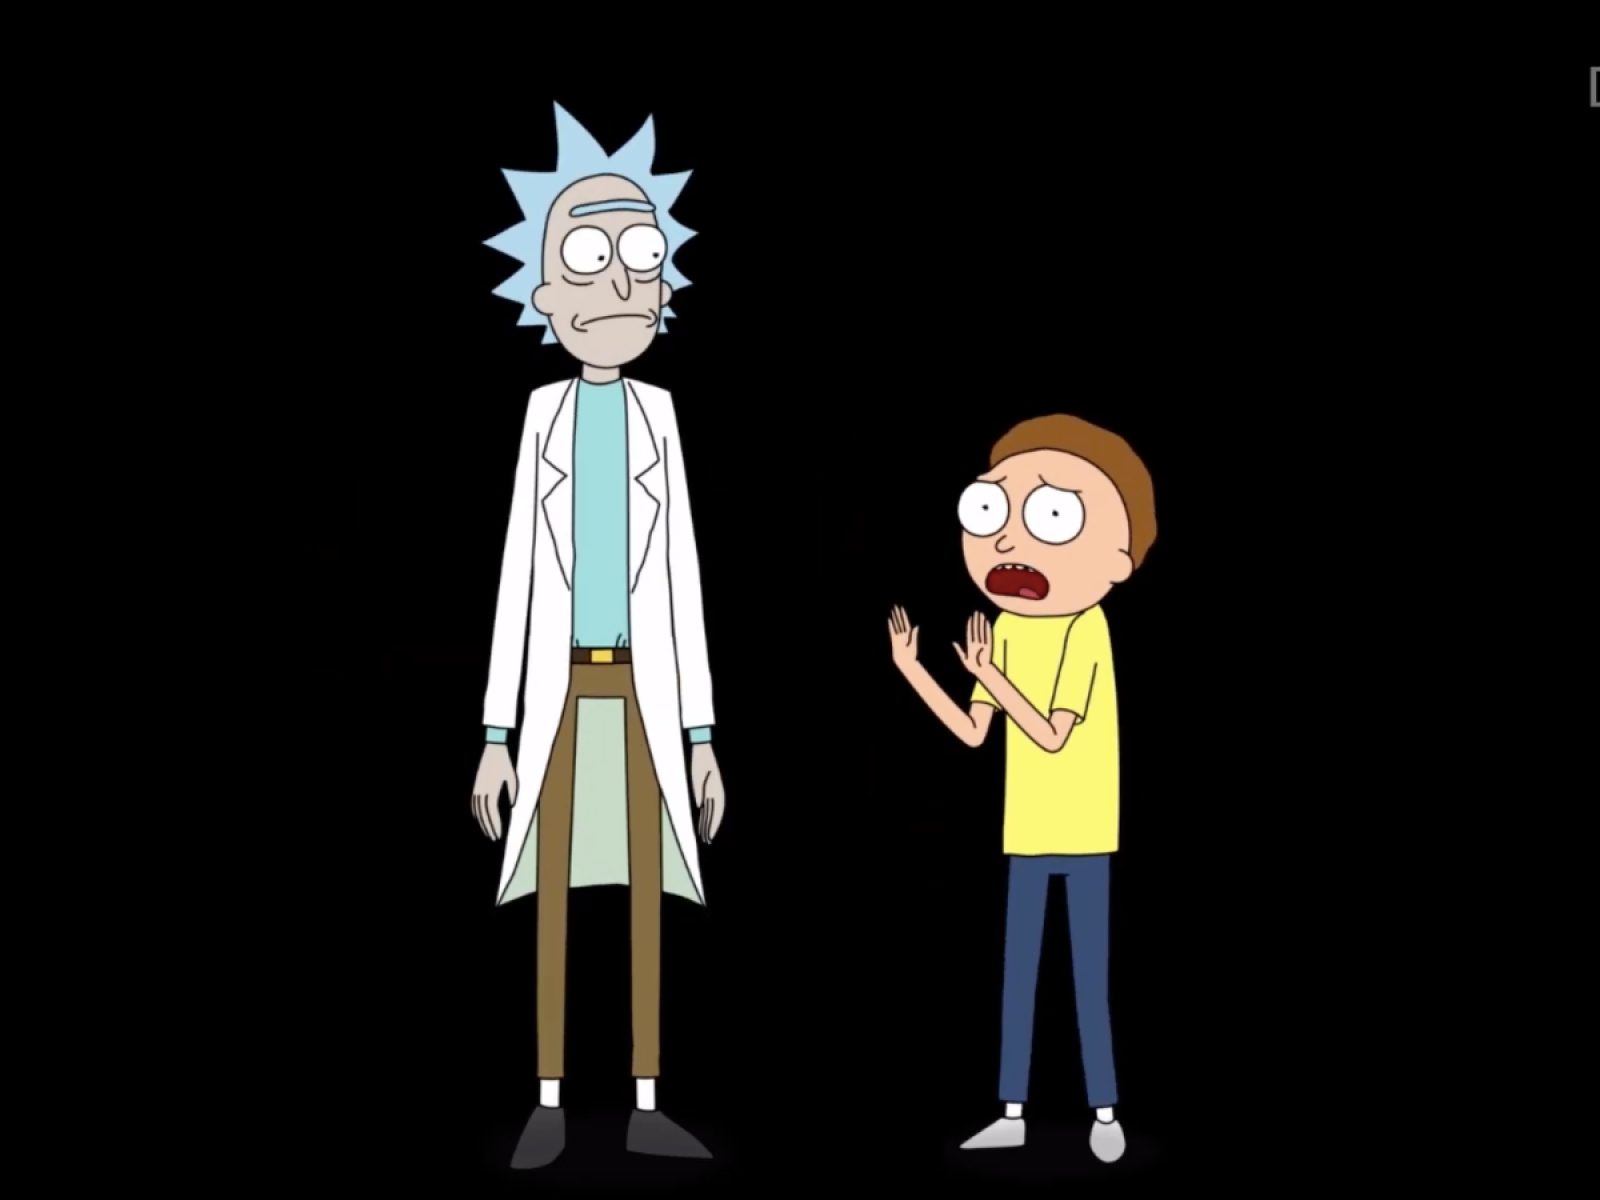 Rick and Morty S4 Image